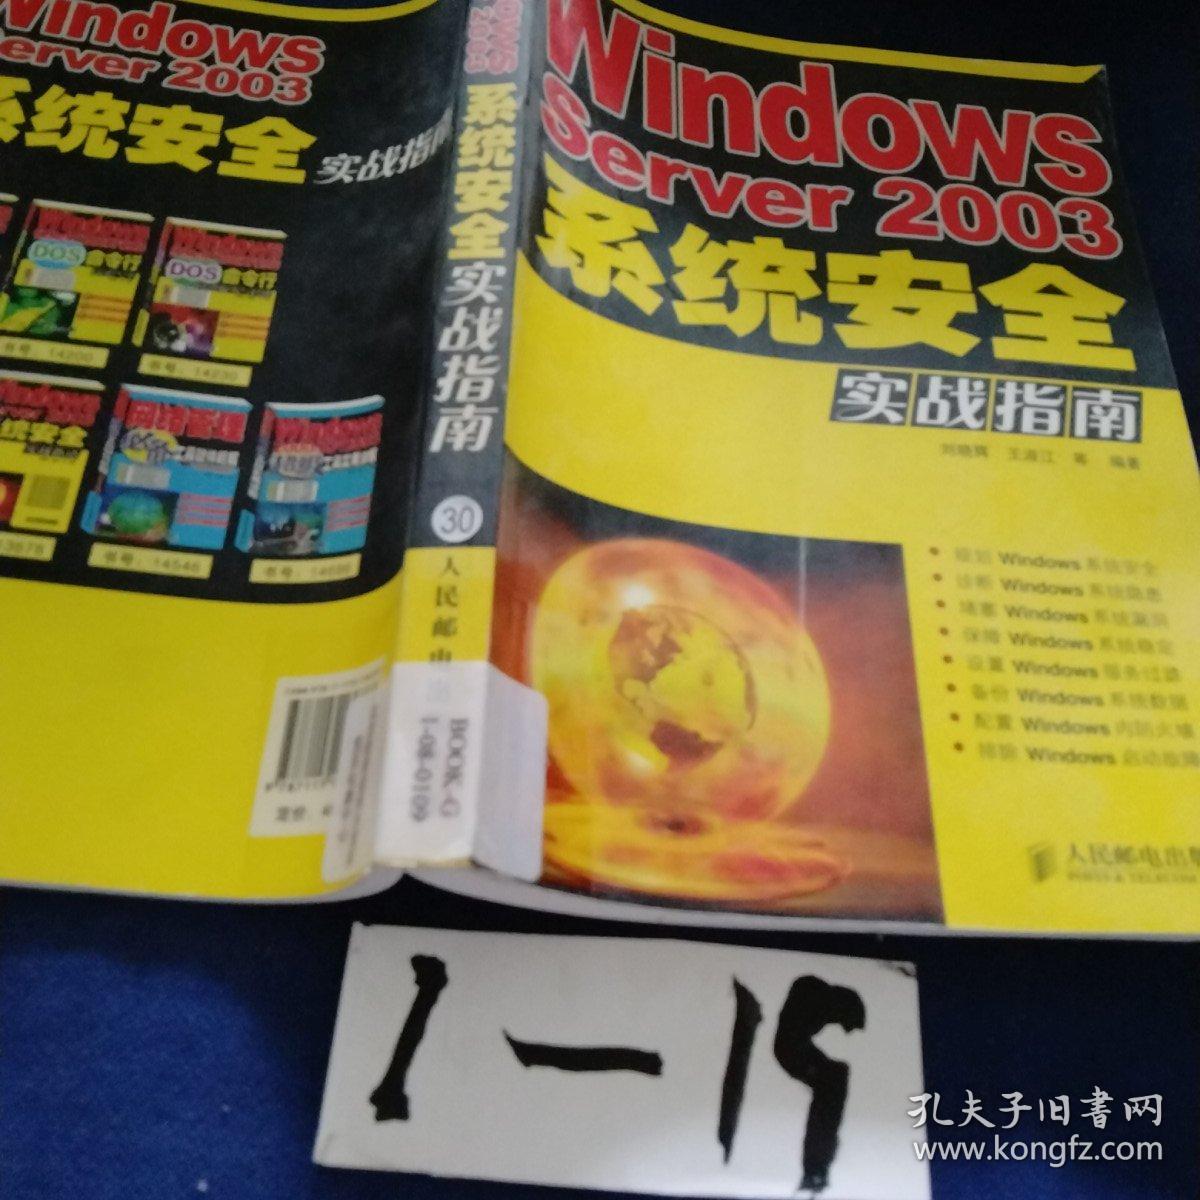 Windows Server2003系统安全实战指南